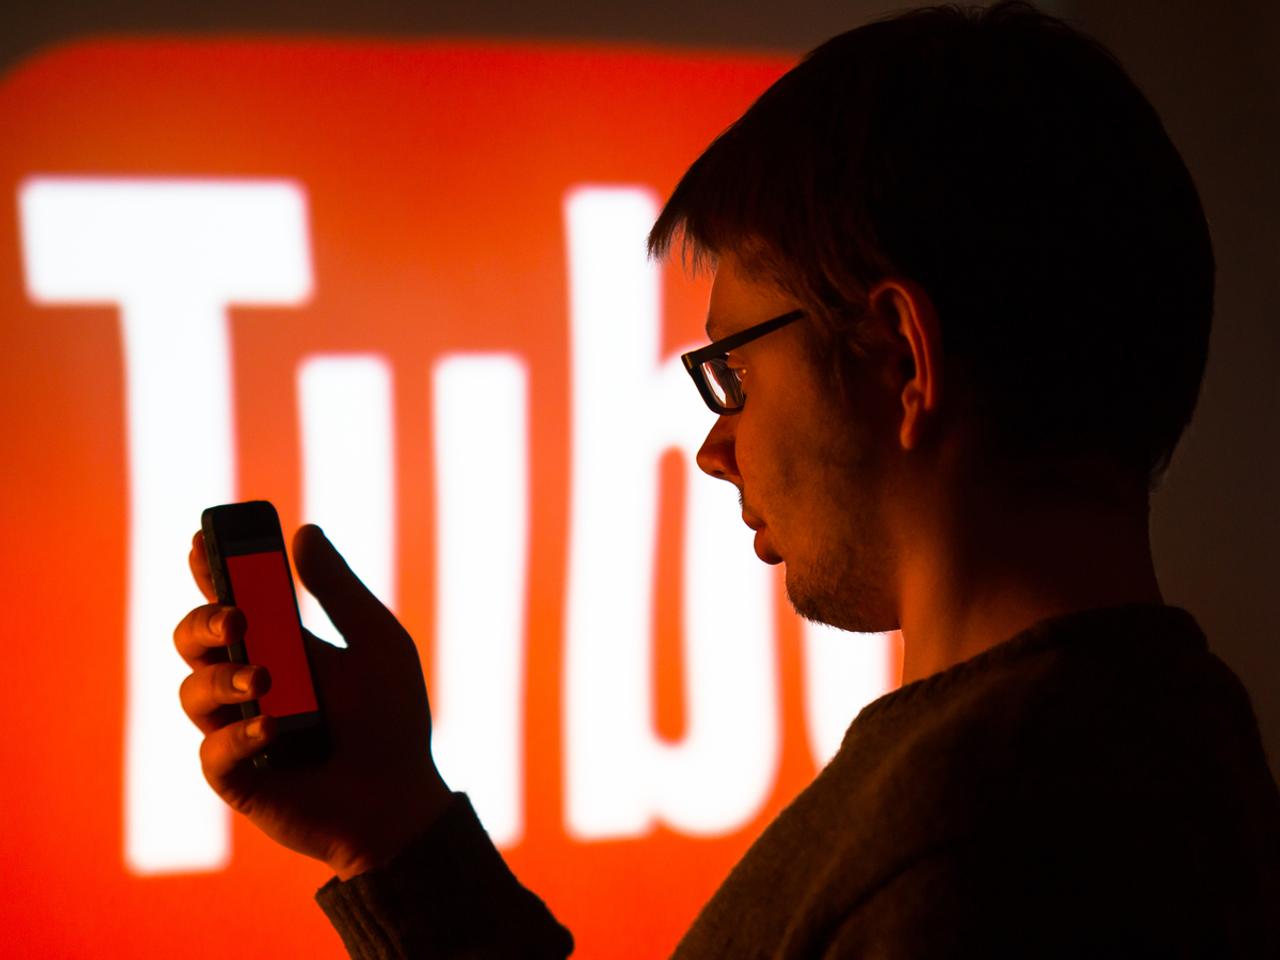 YouTube｢オープンであるために、攻撃的な動画も受け入れる｣